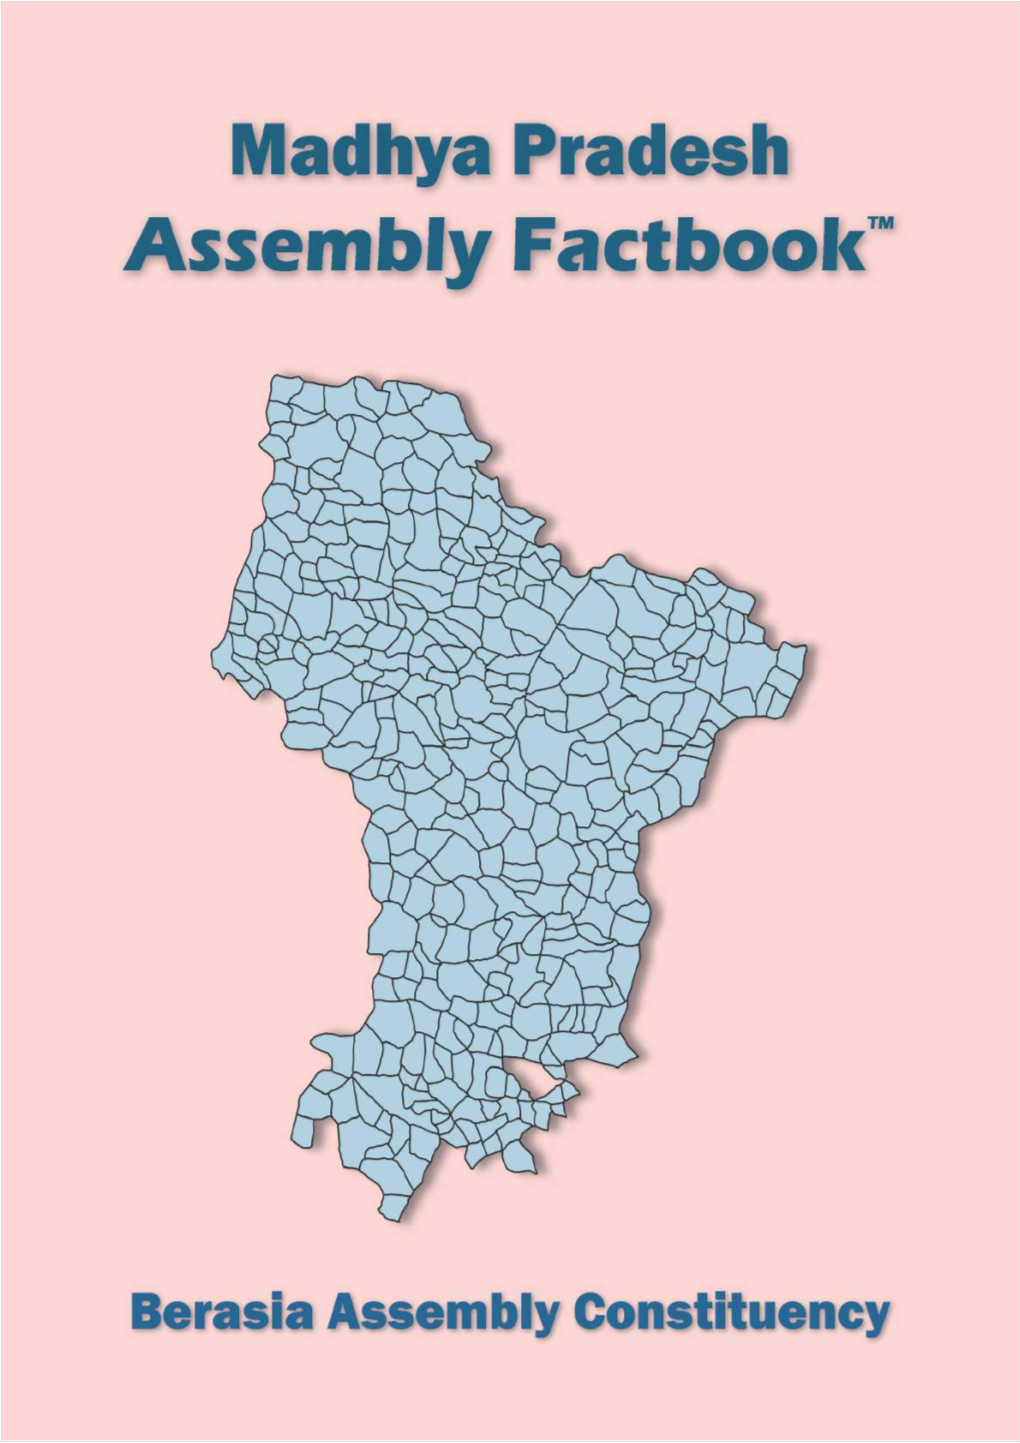 Berasia Assembly Madhya Pradesh Factbook